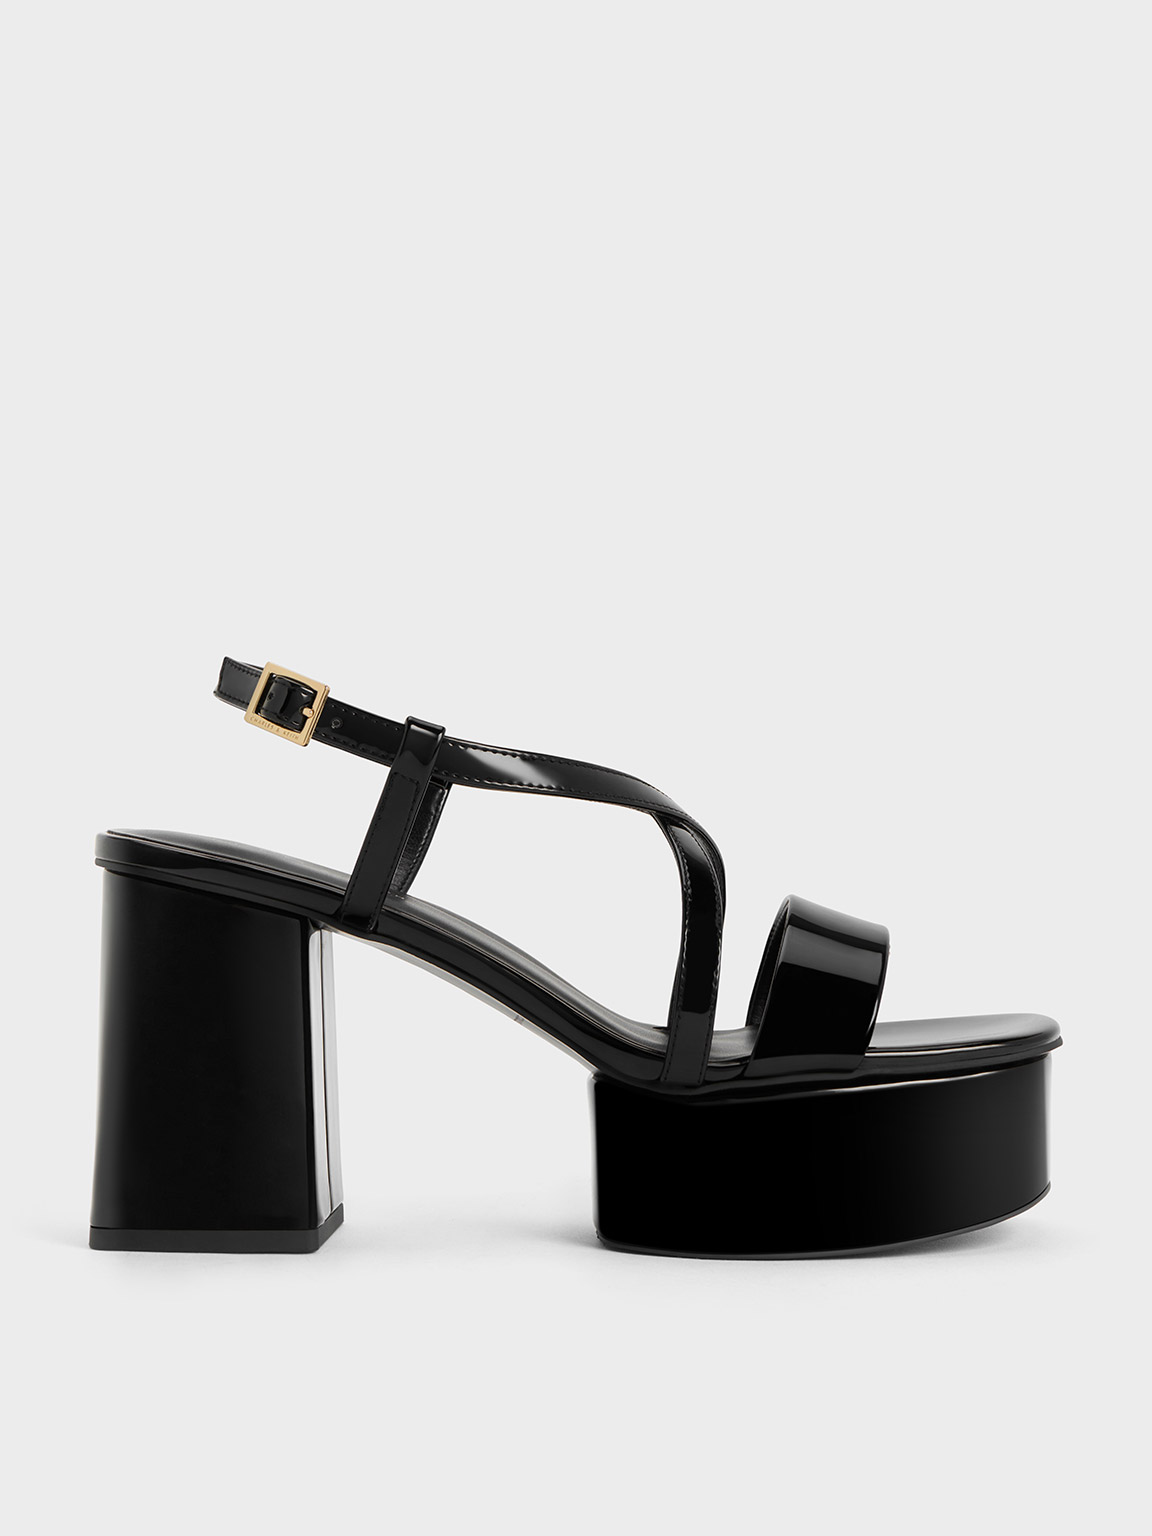 Buy Shoetopia Retro Style Platform Heels at Amazon.in